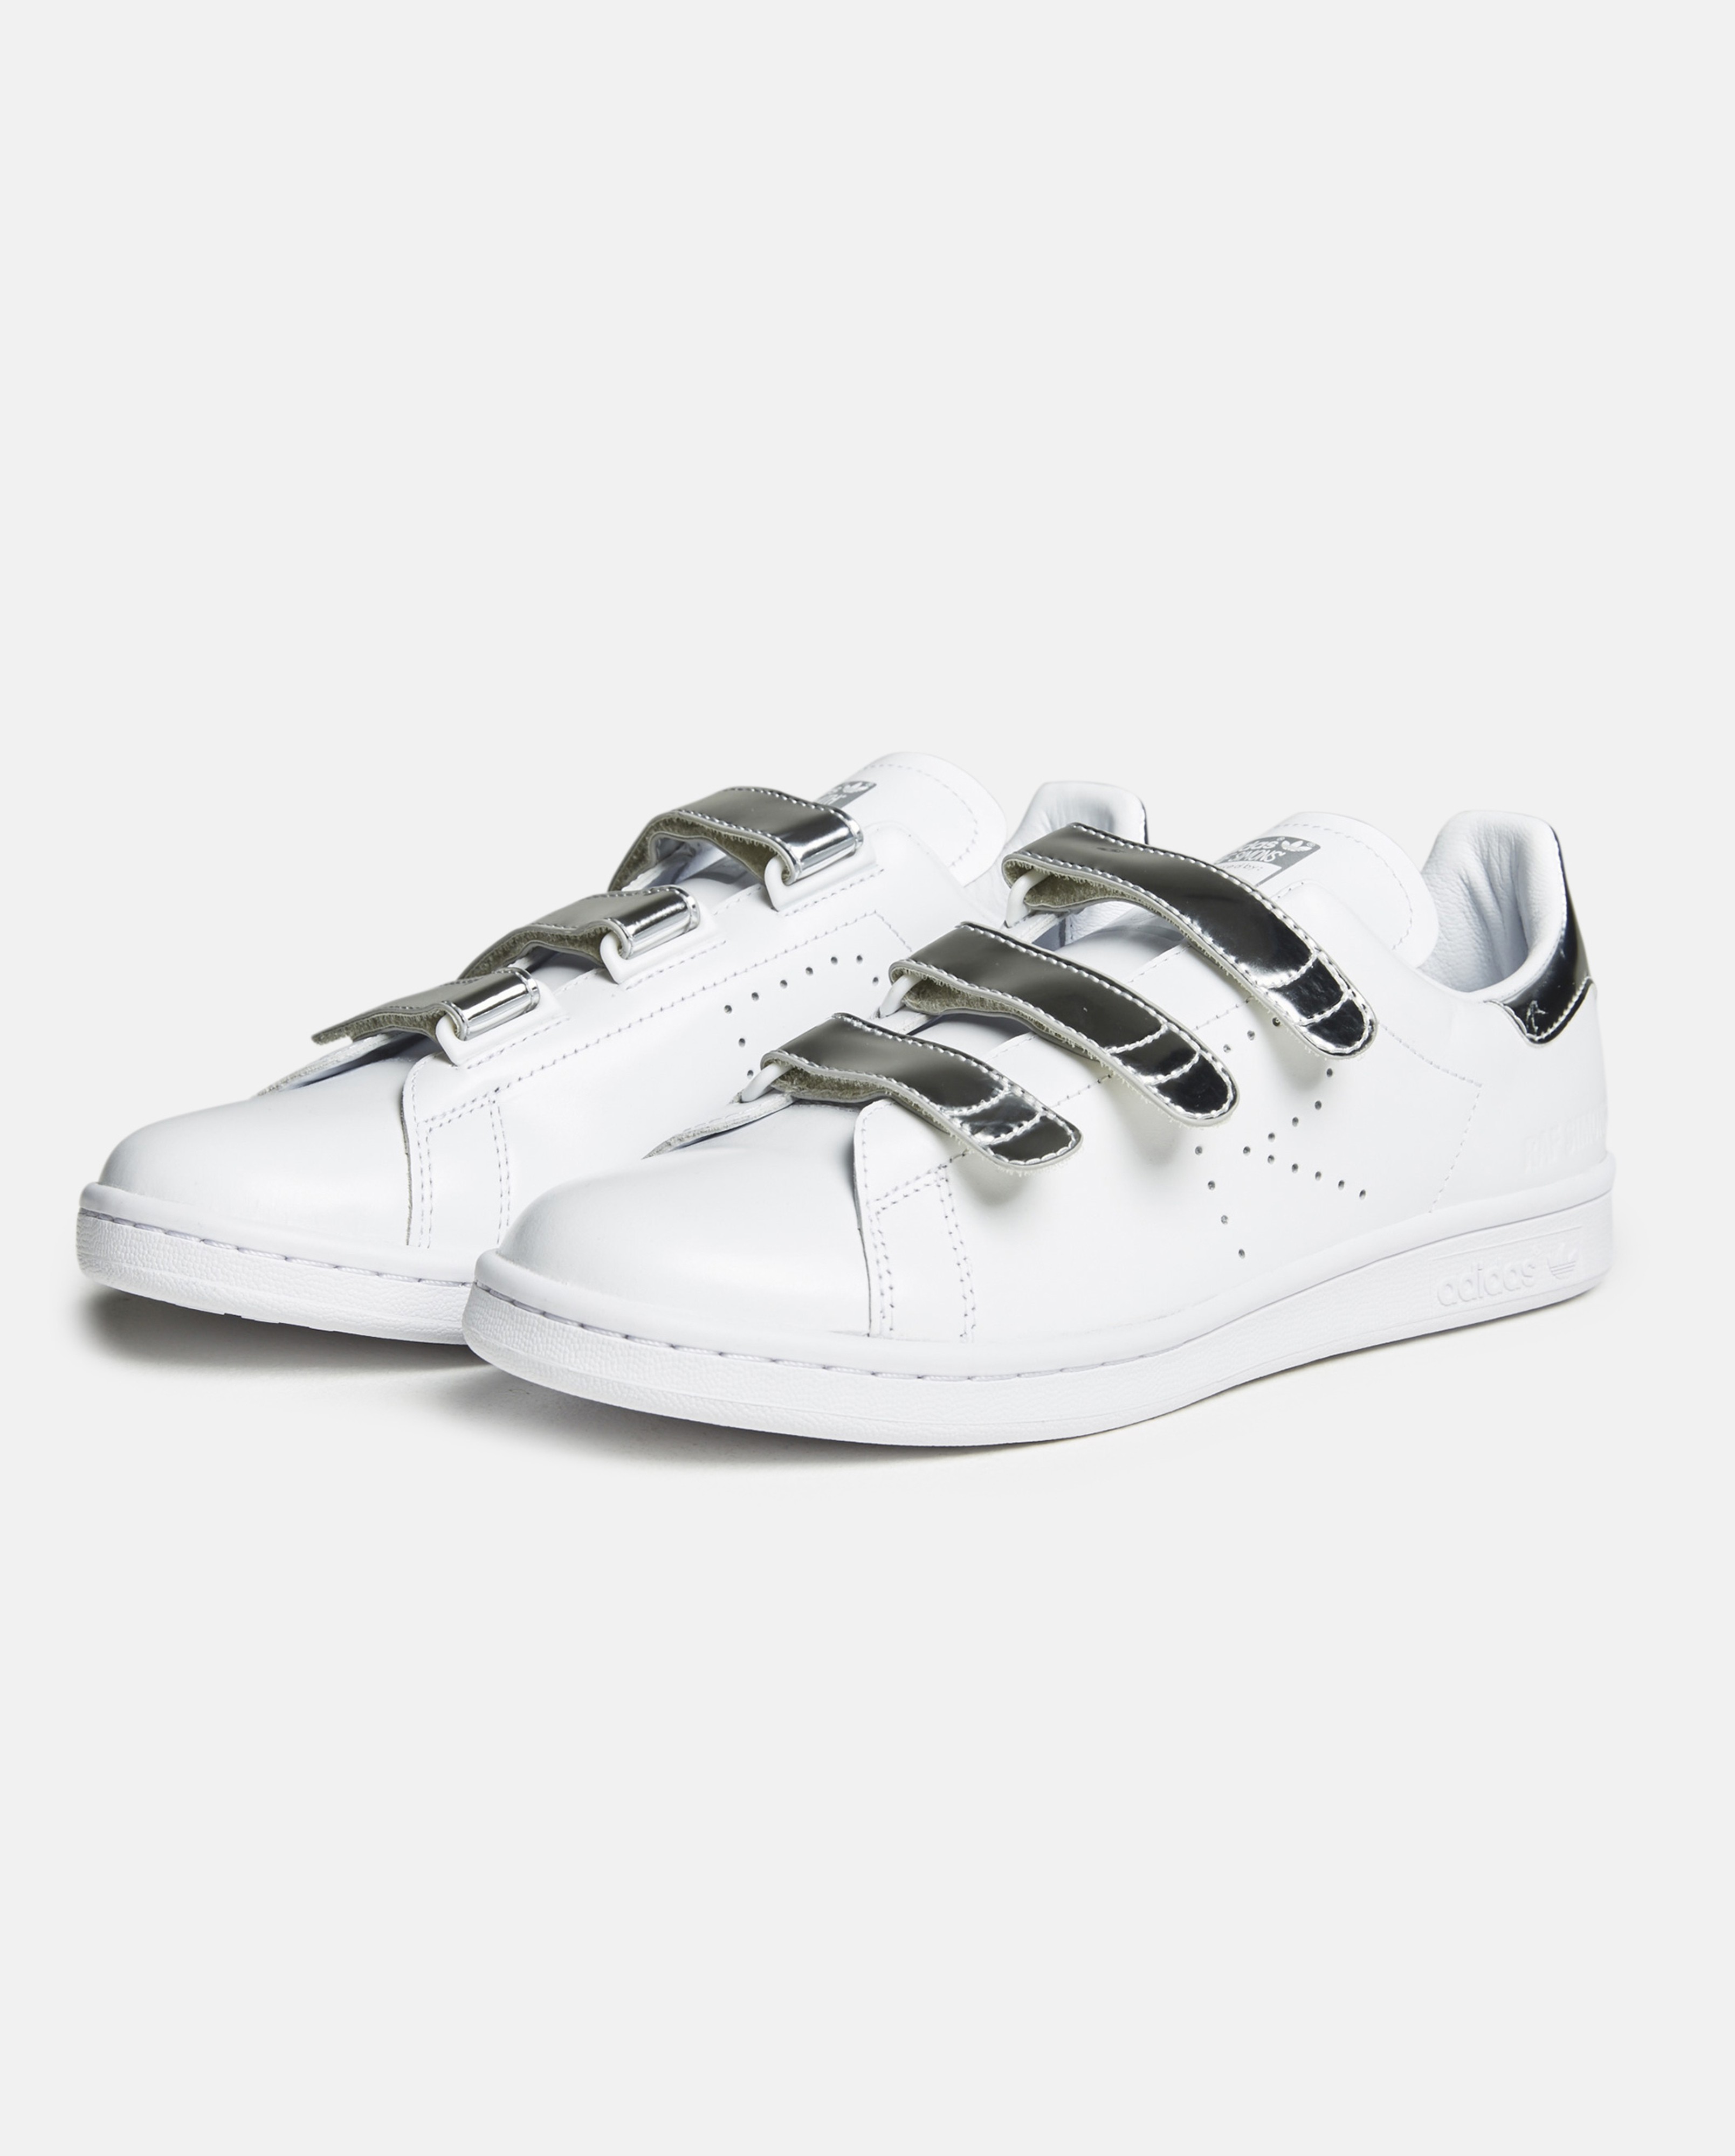 adidas By Raf Simons Raf X Stan Smith Cf Leather Trainers in White Metallic  (Metallic) for Men - Lyst